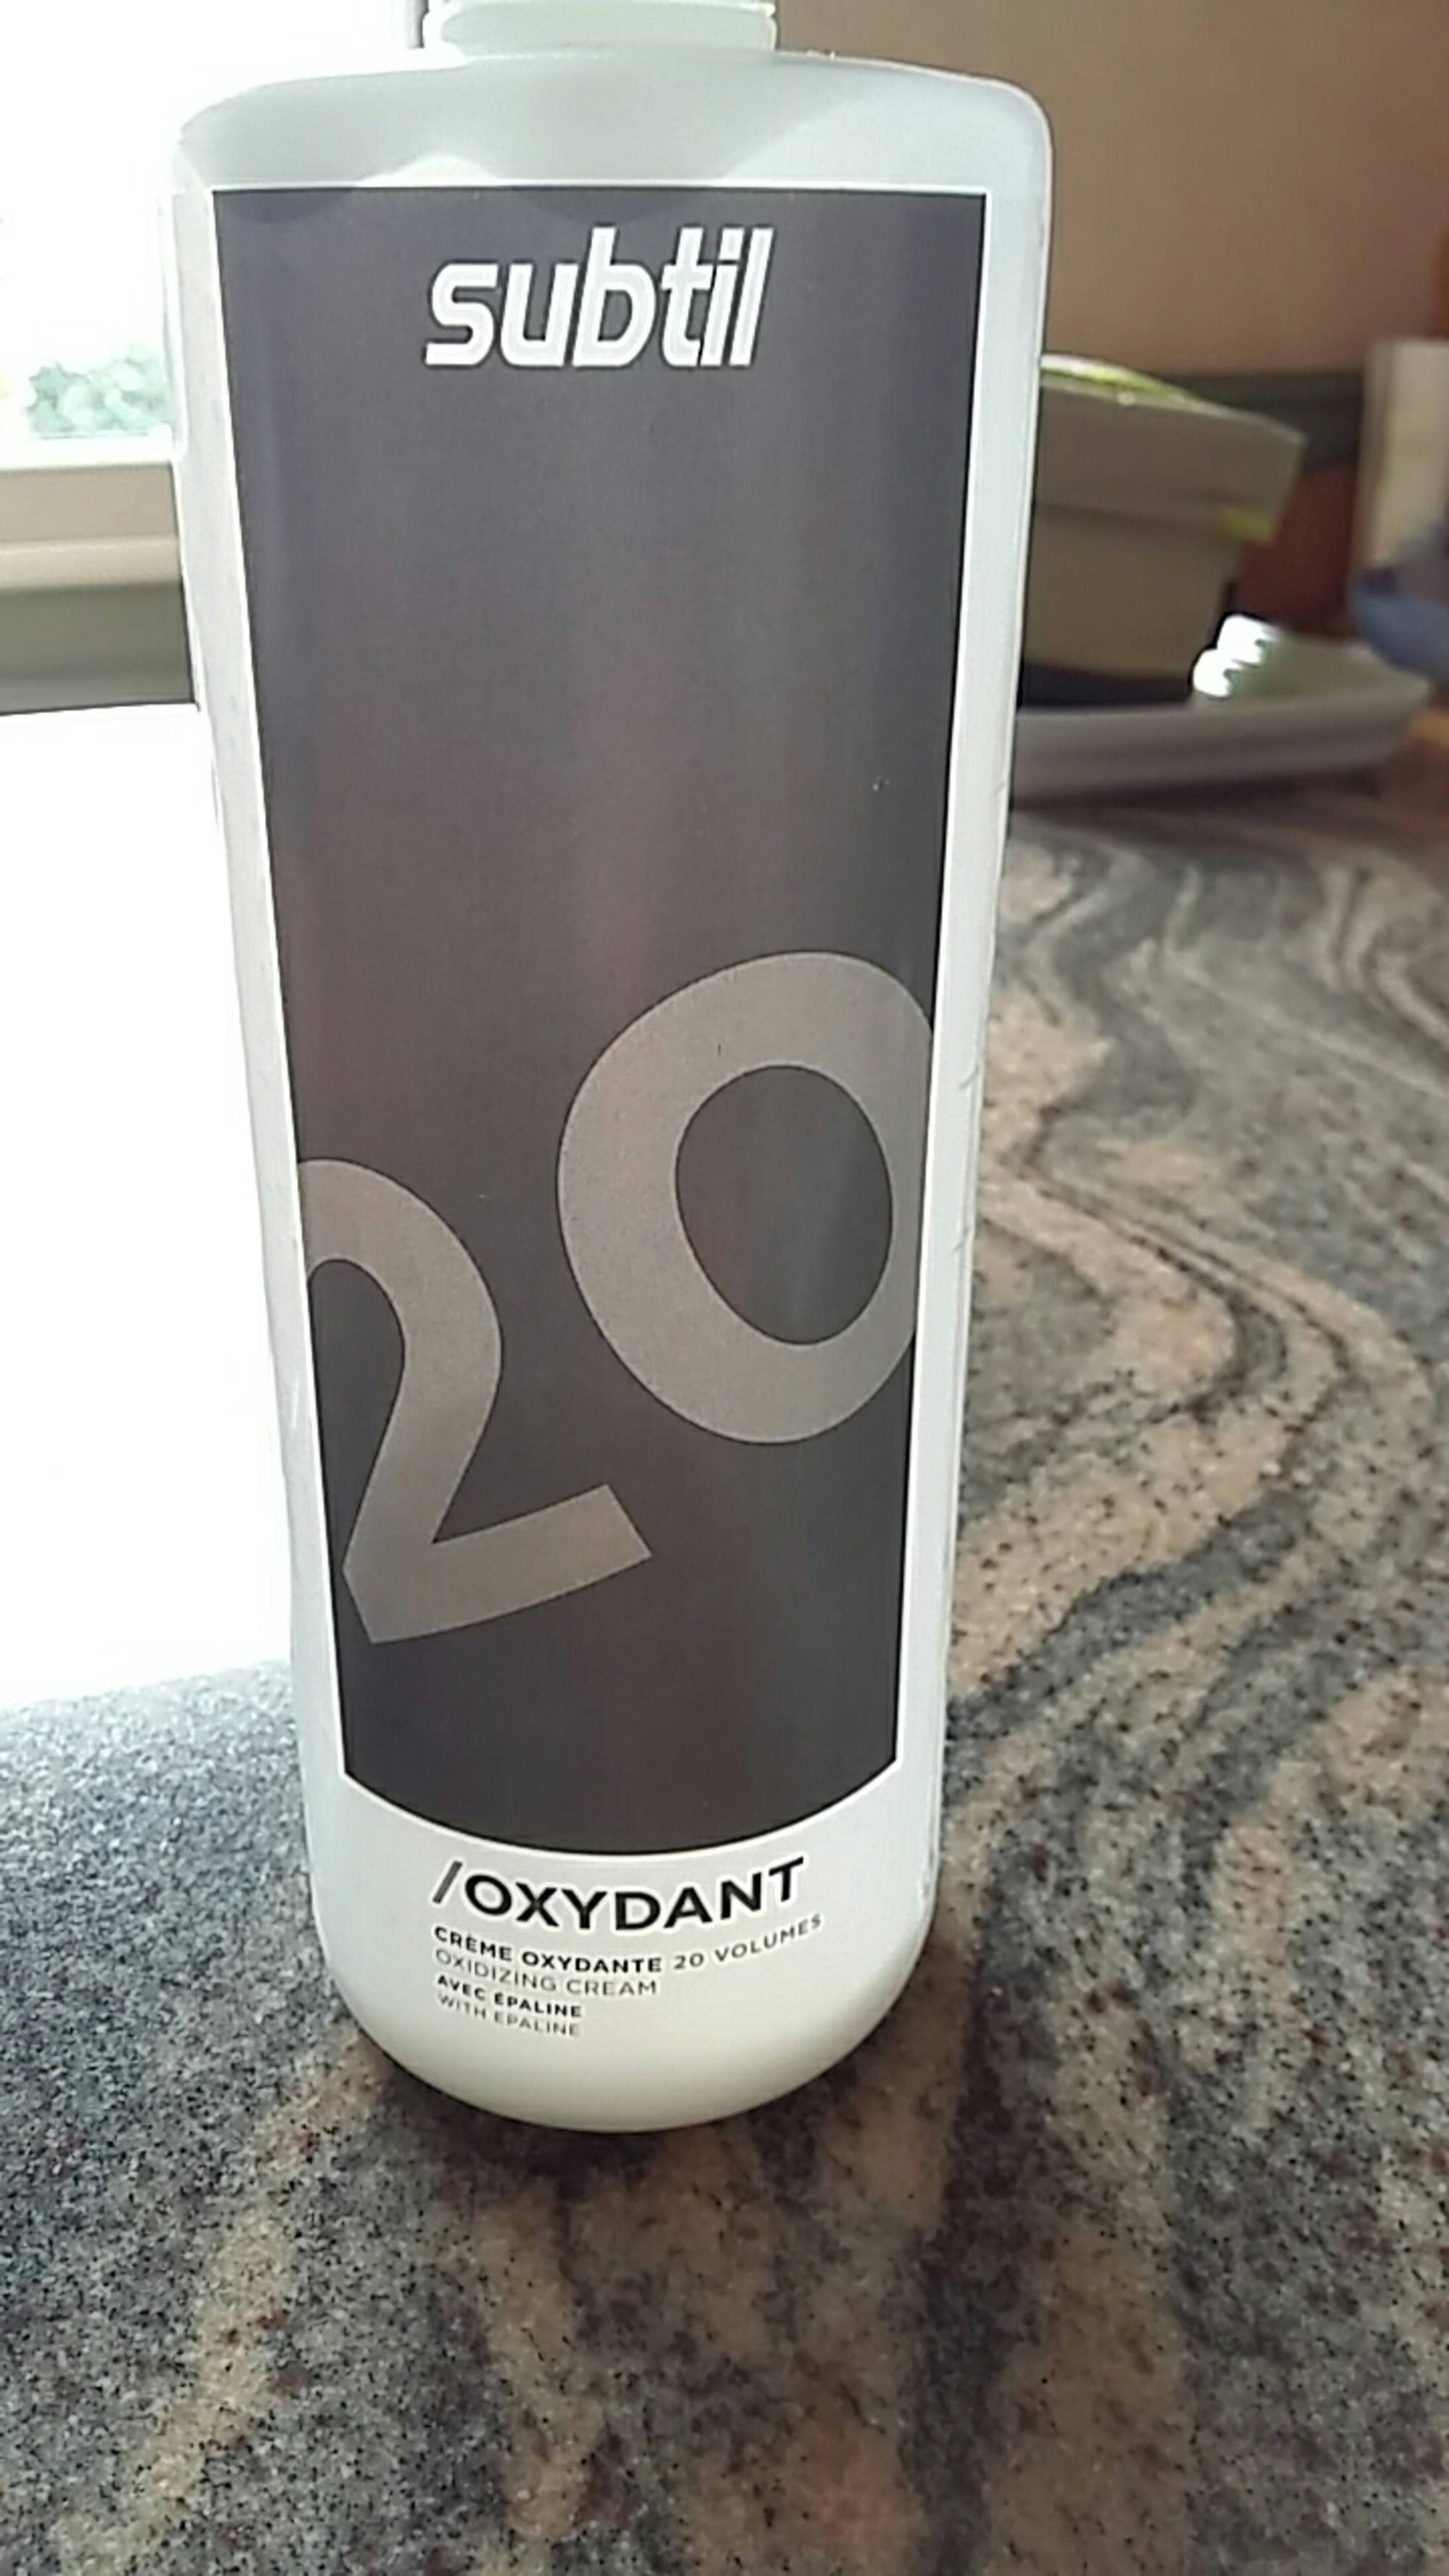 DUCASTEL - Oxydant - Crème oxydante 20 volumes